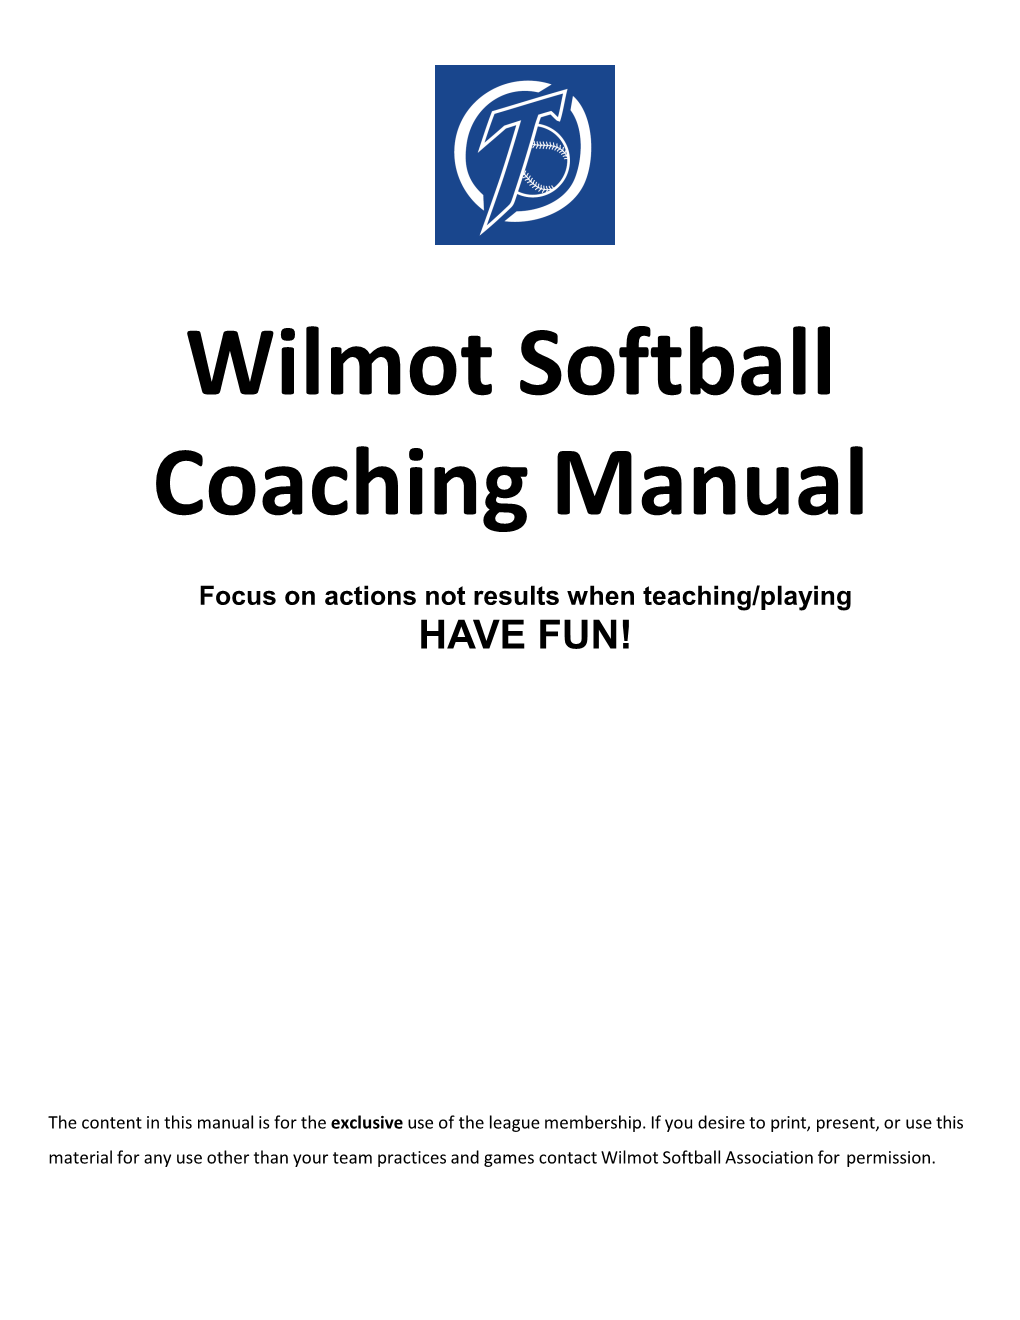 Wilmot Softball Coaching Manual